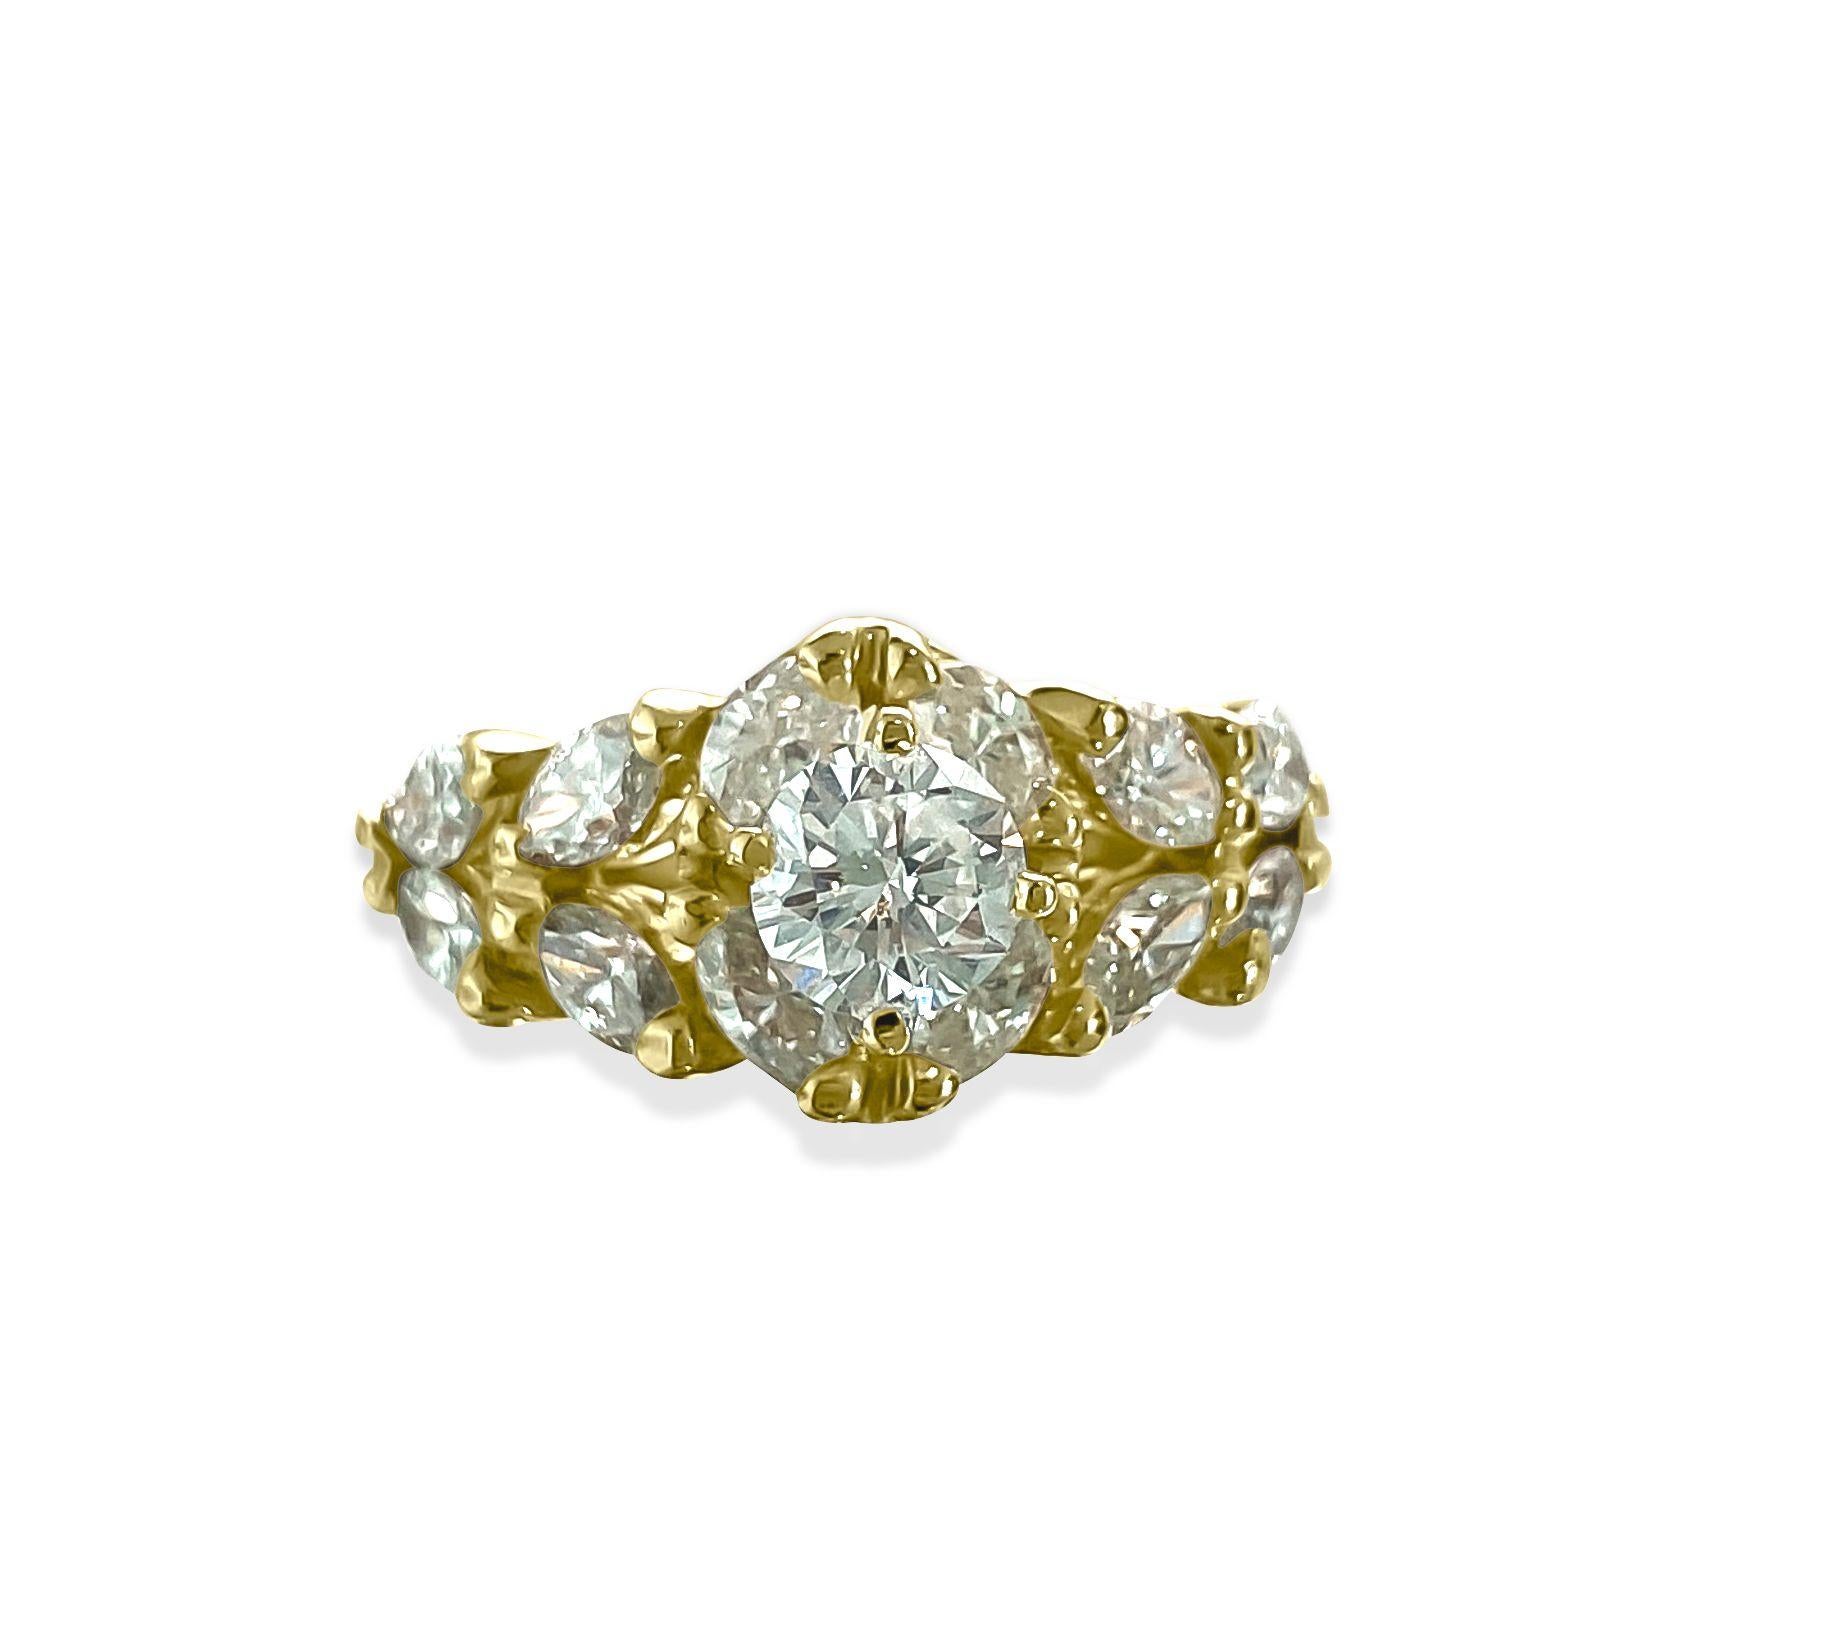 Women's 14K Gold, 1.85 CT Diamond Engagement Ring. For Sale